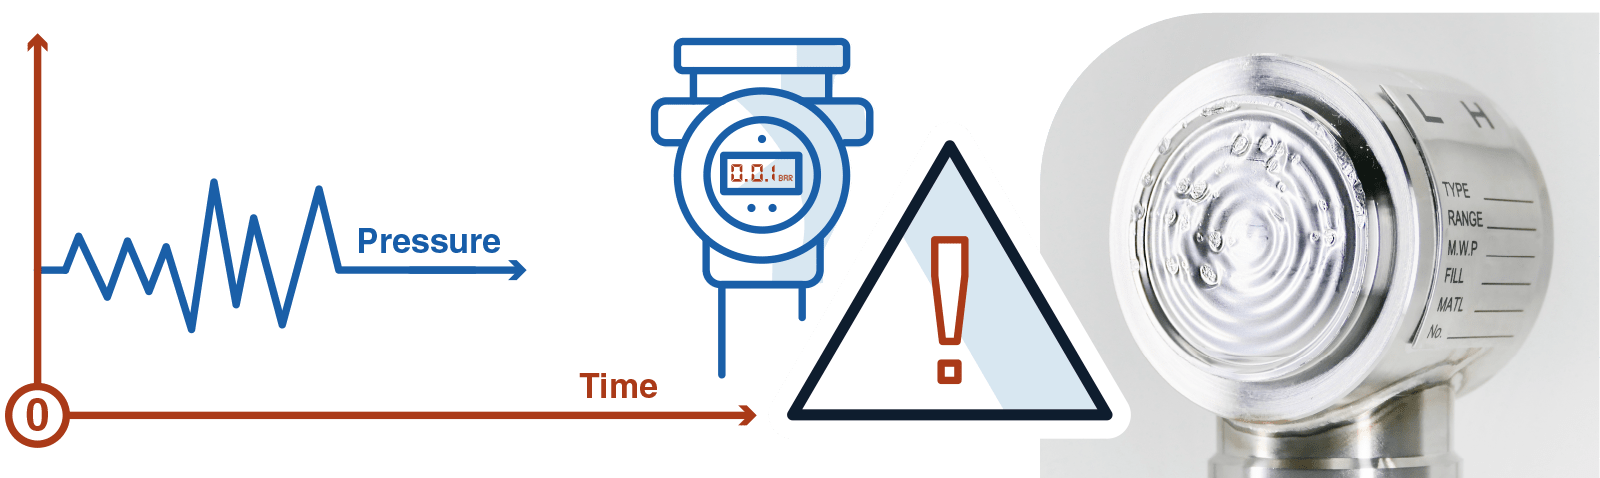 Measurement error on pressure transmitter due to mechanical wear or damage